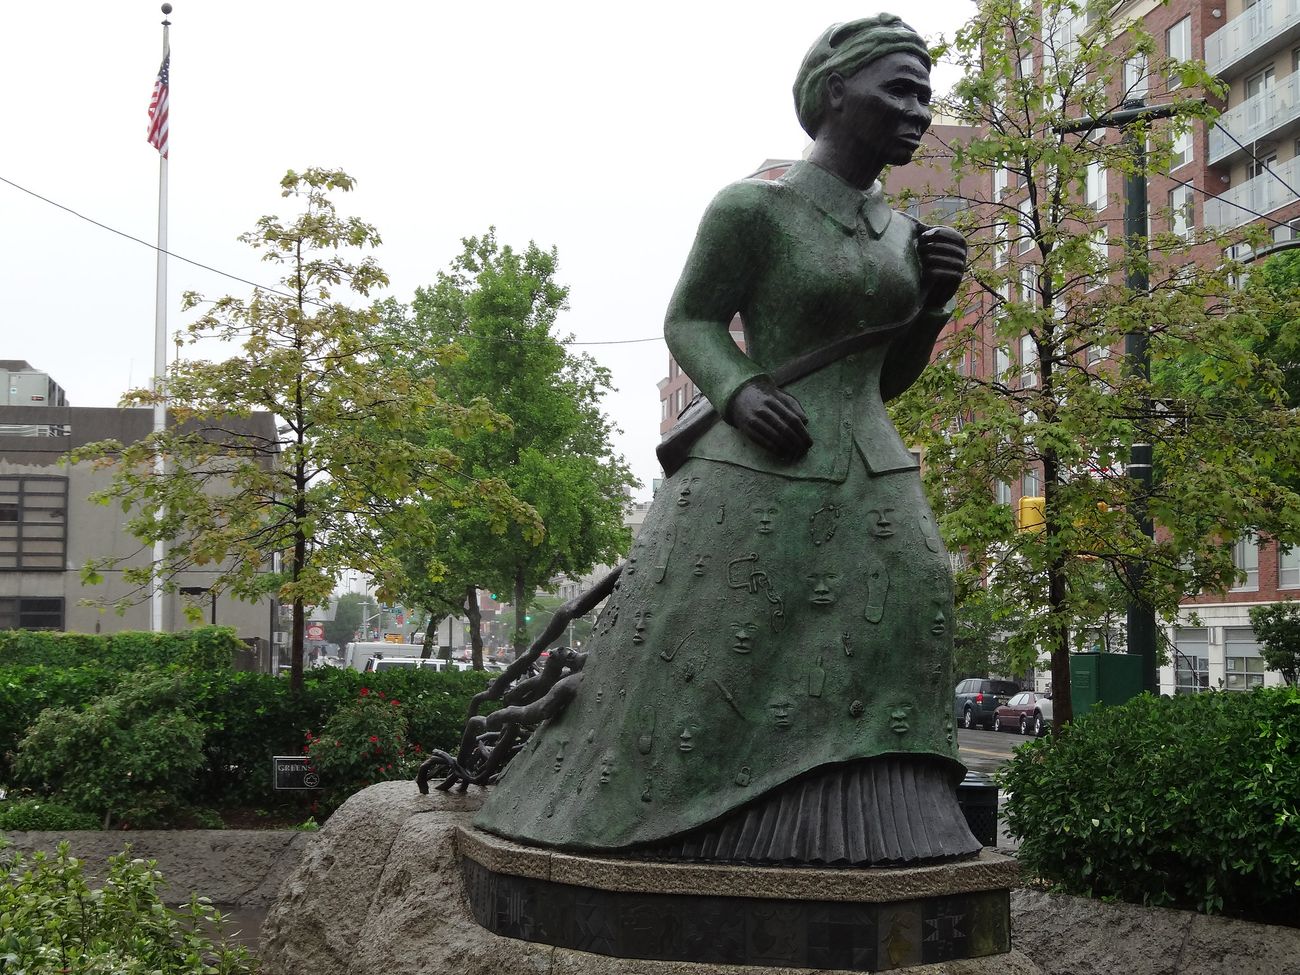 Allison Saar, The Harriet Tubman Memorial, Harlem, New York 2008. Photo denisbin 2012 CC BY ND 2.0 via Flickr